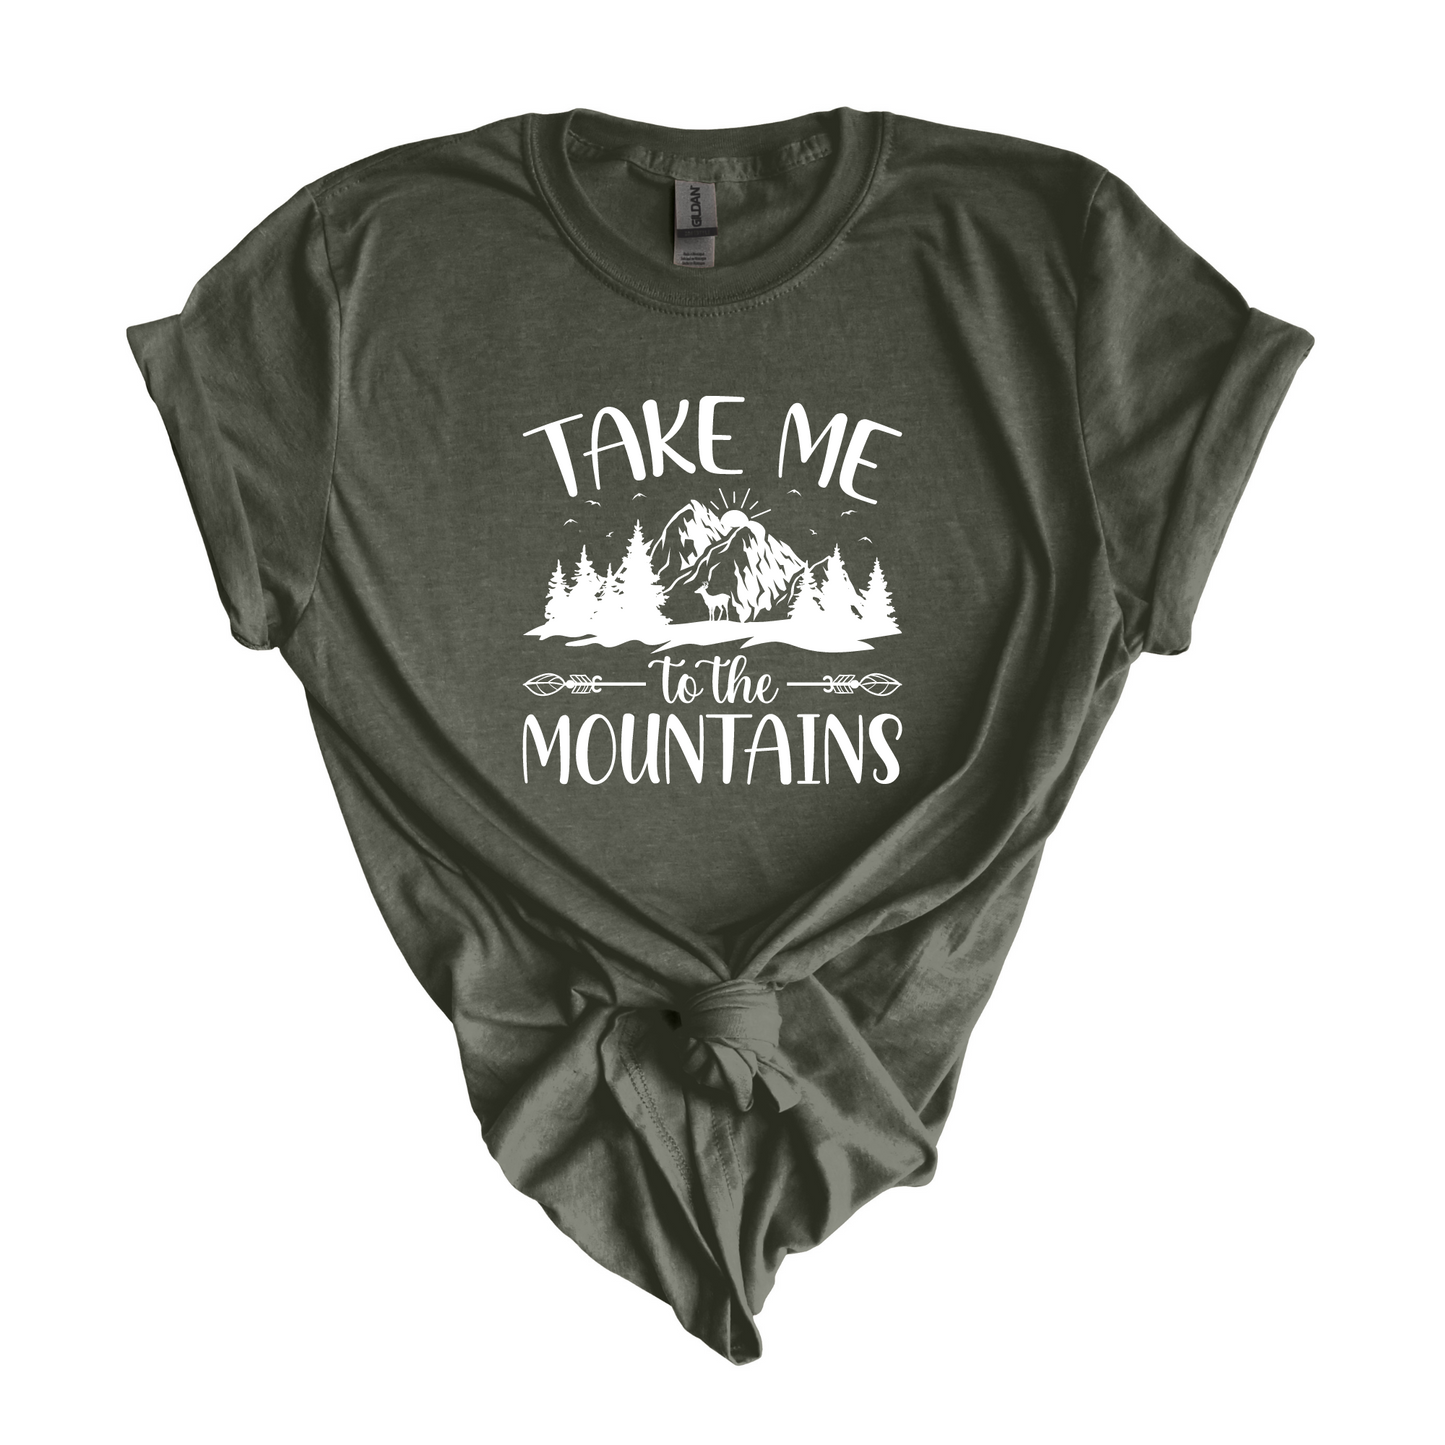 Take Me To The Mountains Tshirt